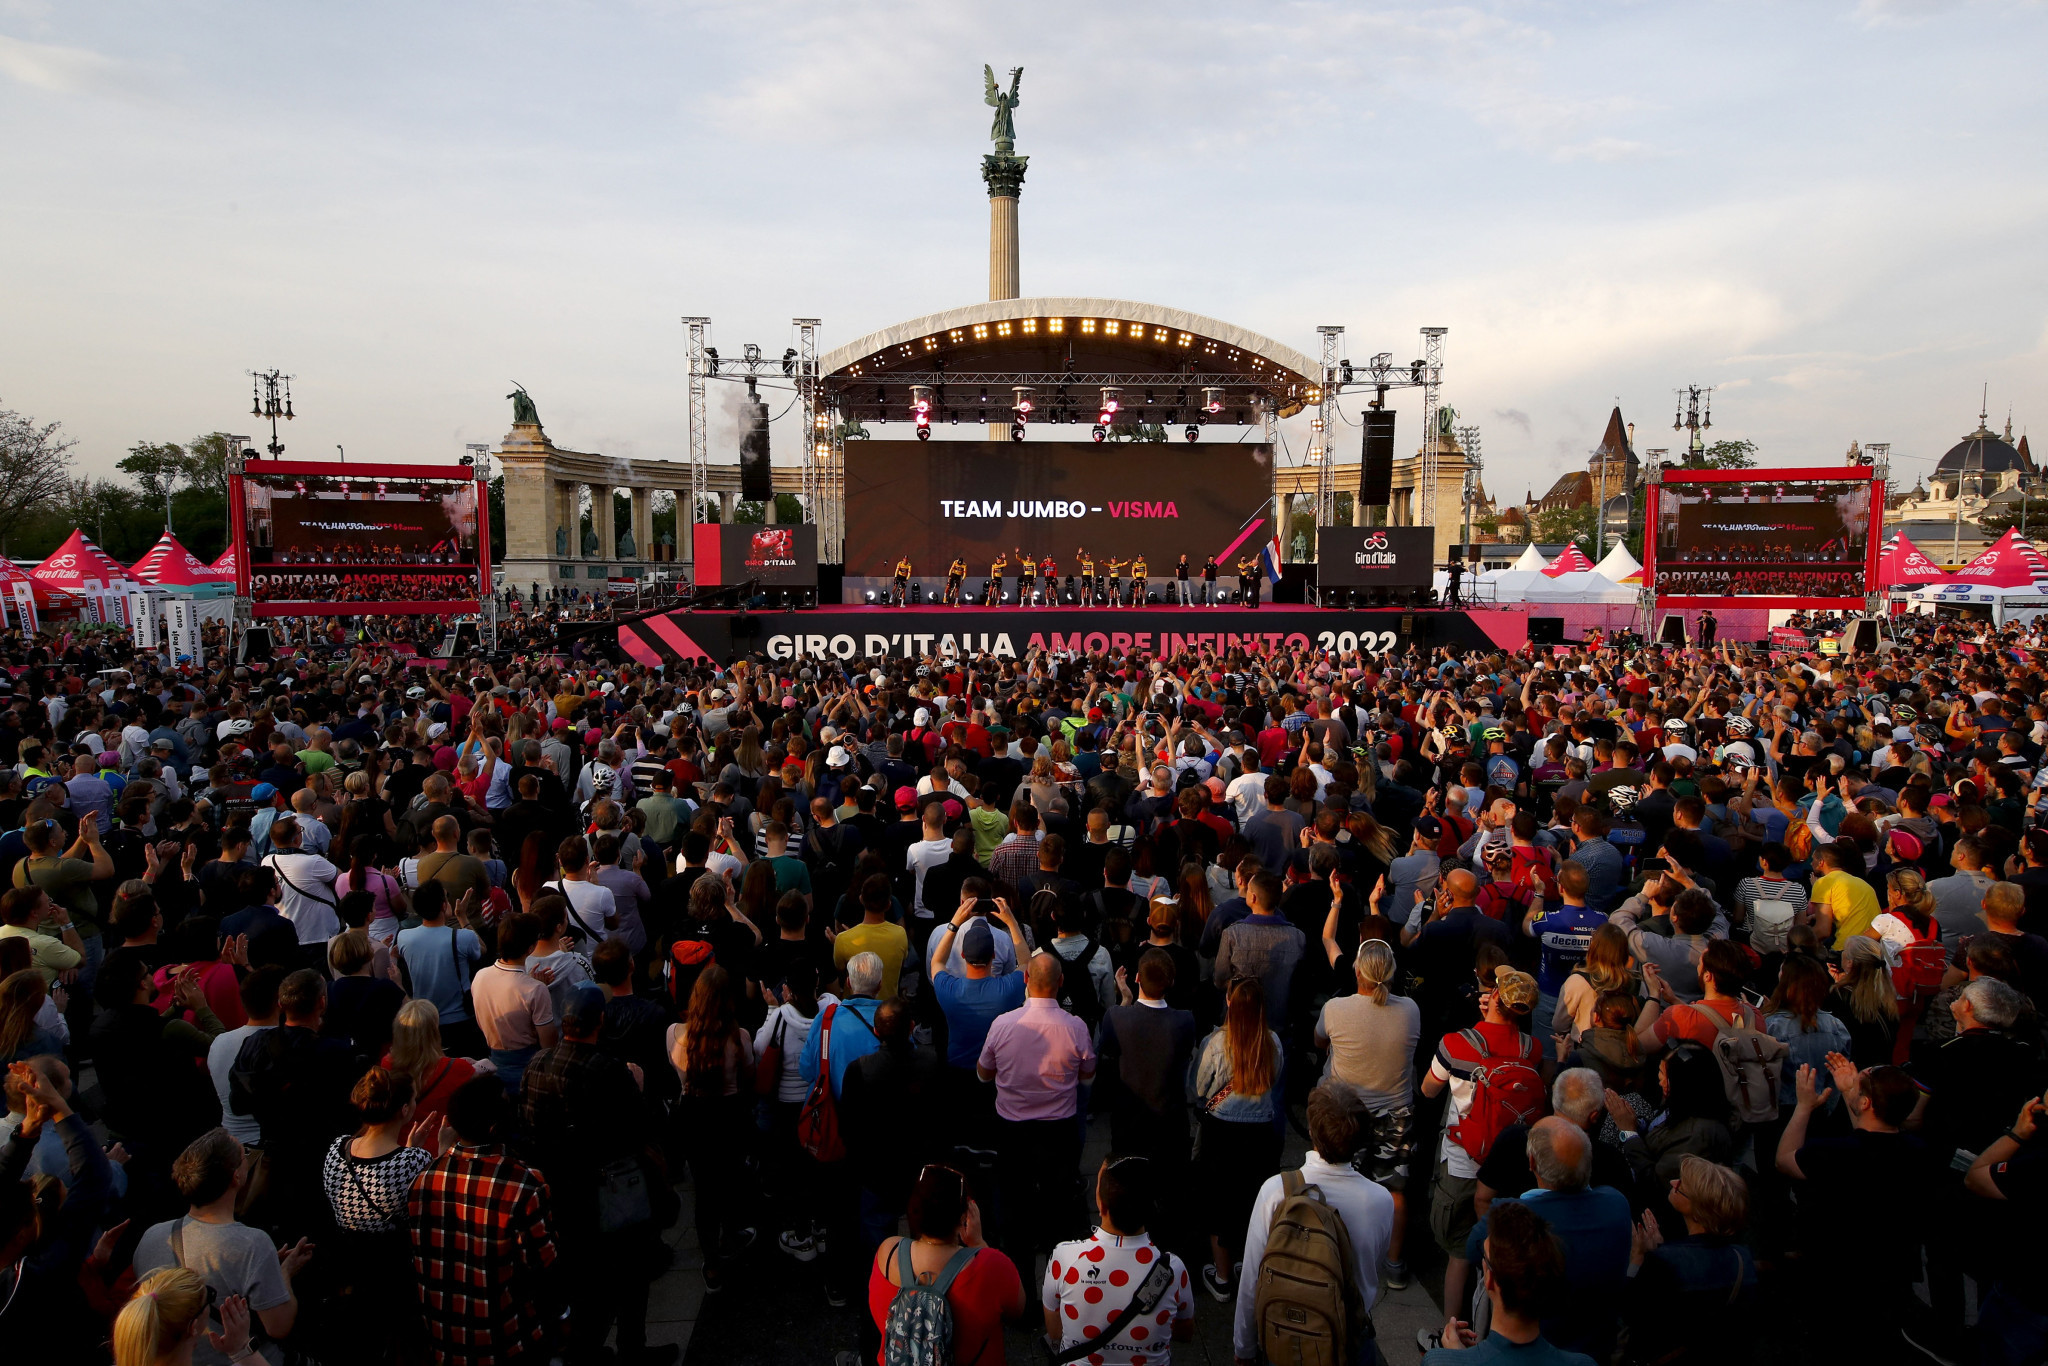 Giro d'Italia to start in Budapest as Van der Poel targets dream debut